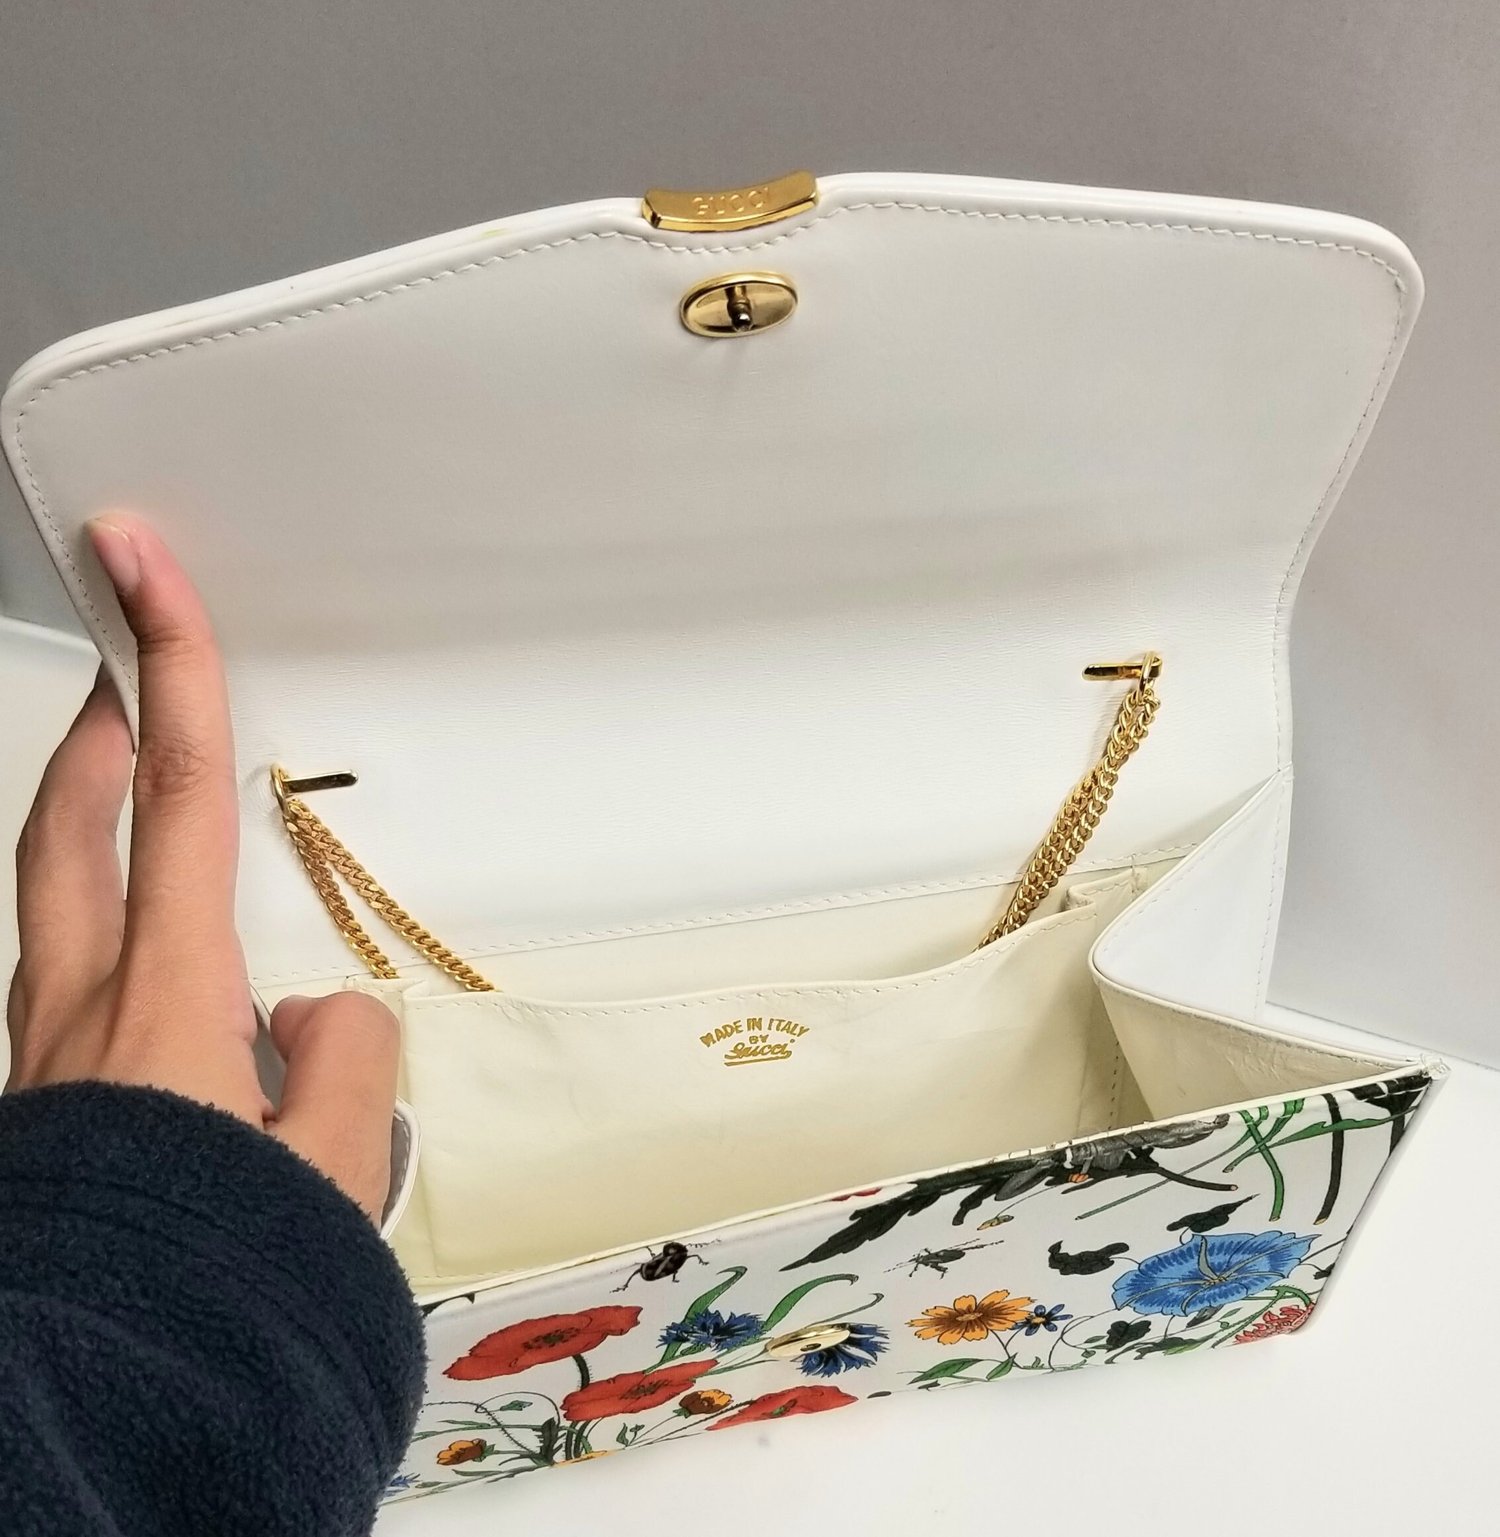 Gucci Box Floral Bags & Handbags for Women